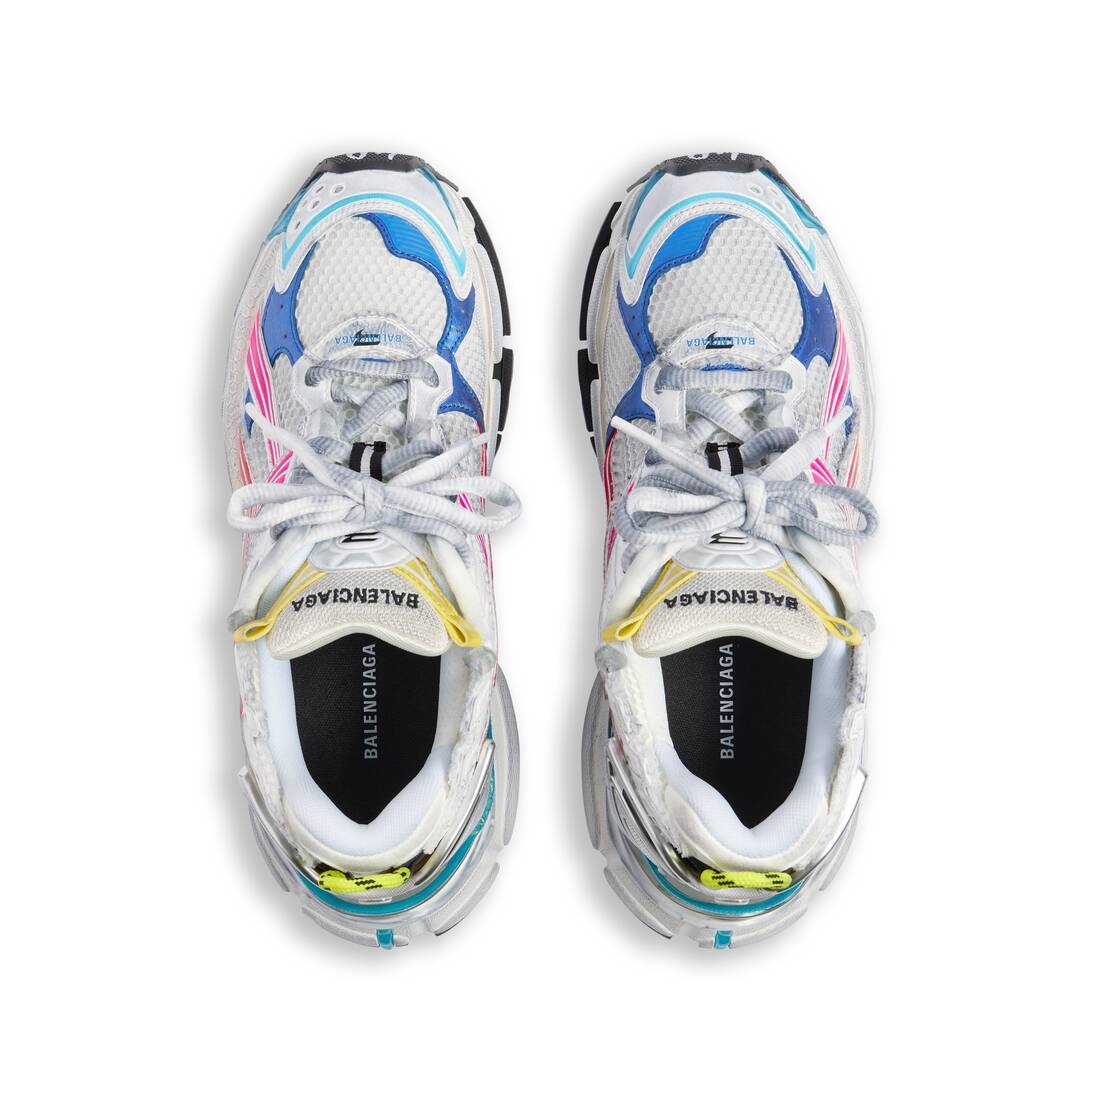 Women's Runner Sneaker in Multicolored - 6